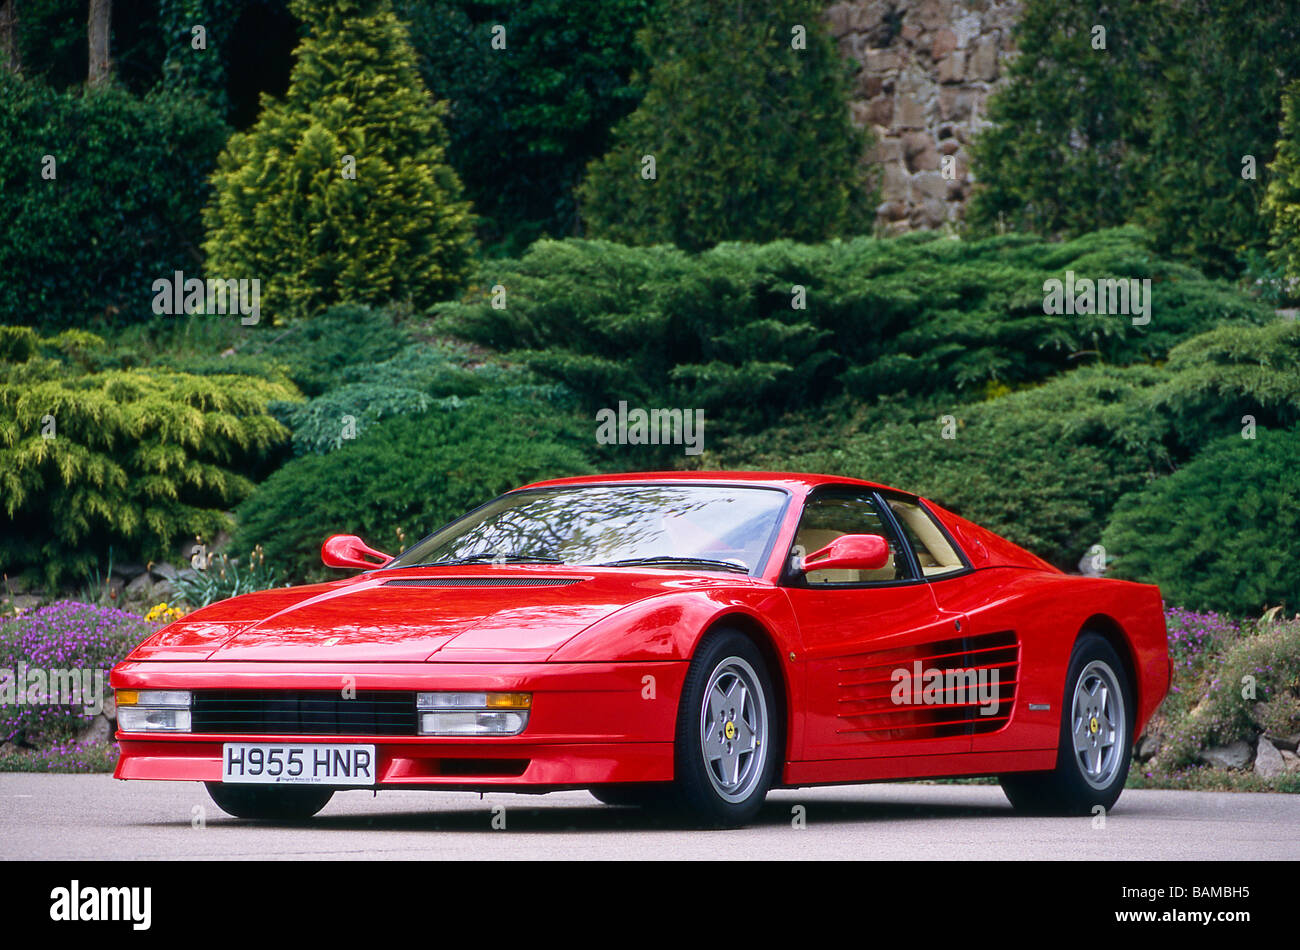 Red Ferrari Testarossa sports car Stock Photo